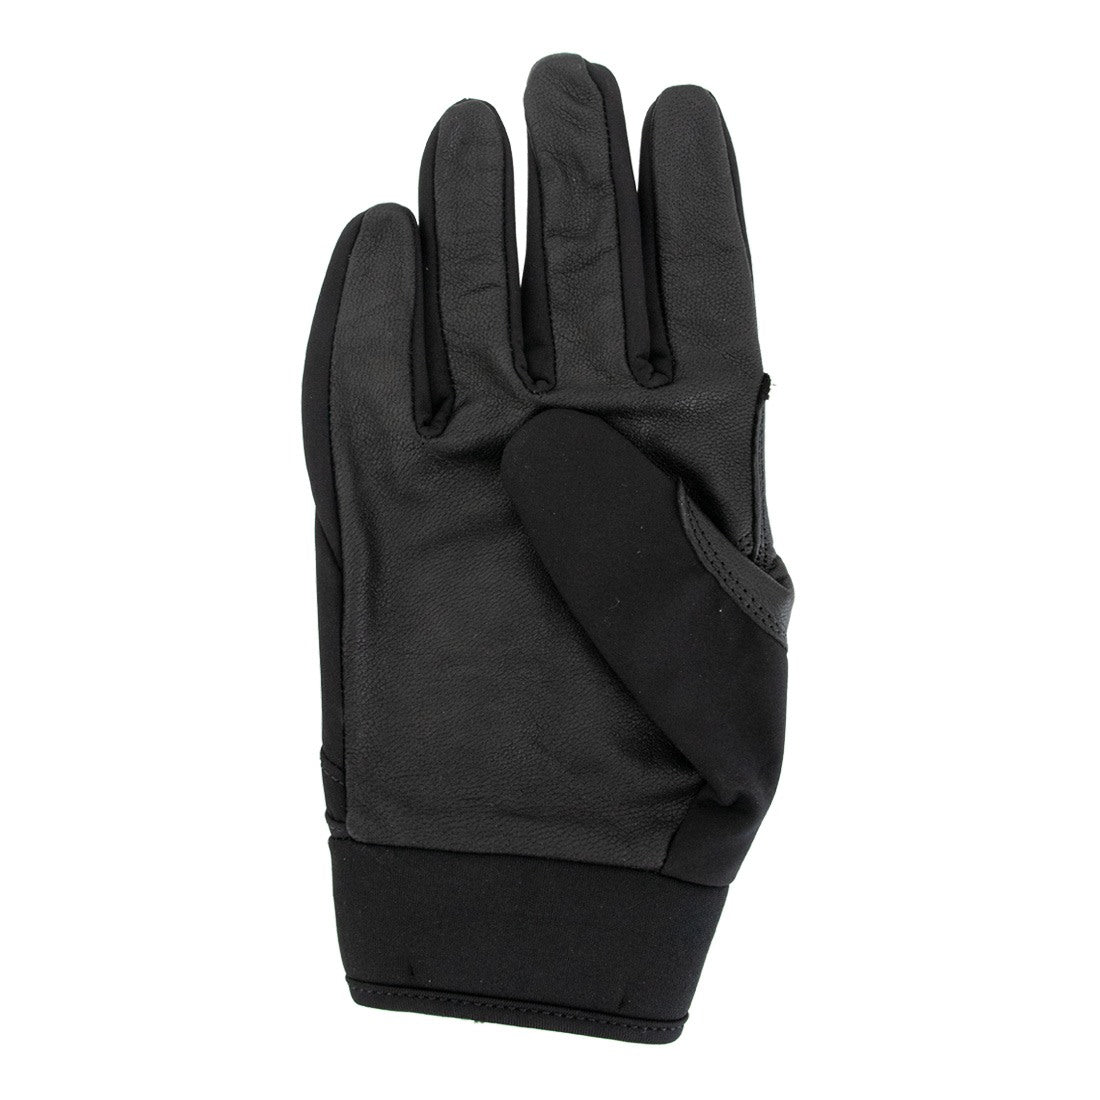 Glacier Glove Guide Gloves Palm View